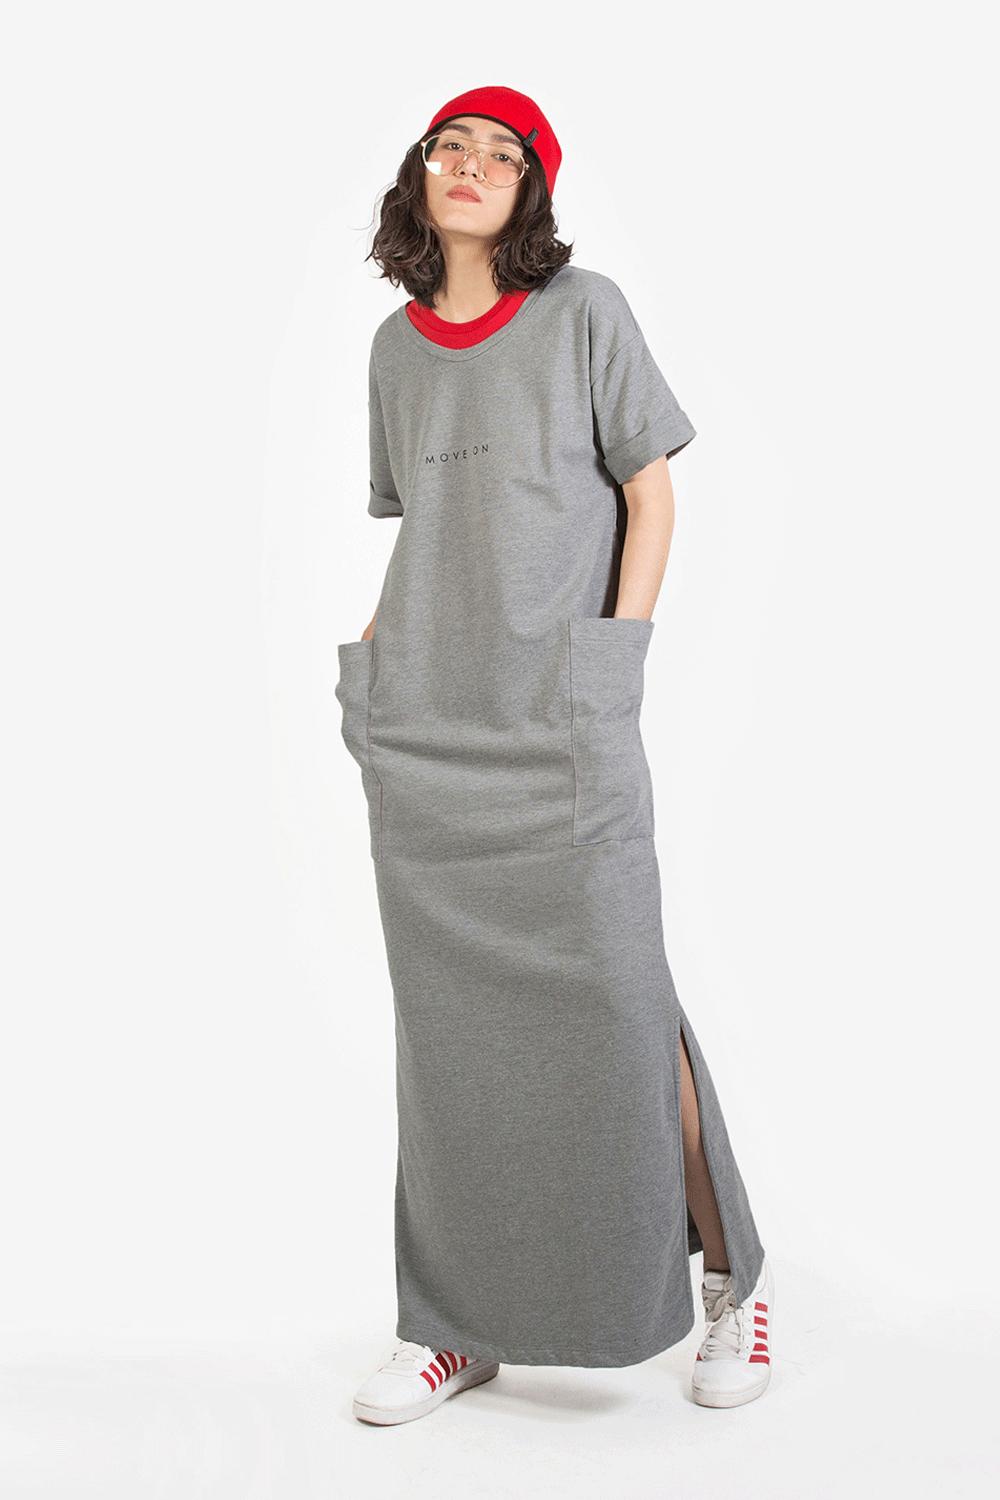 Move On Basic Poket Dress by WLS (Black & Gray) 